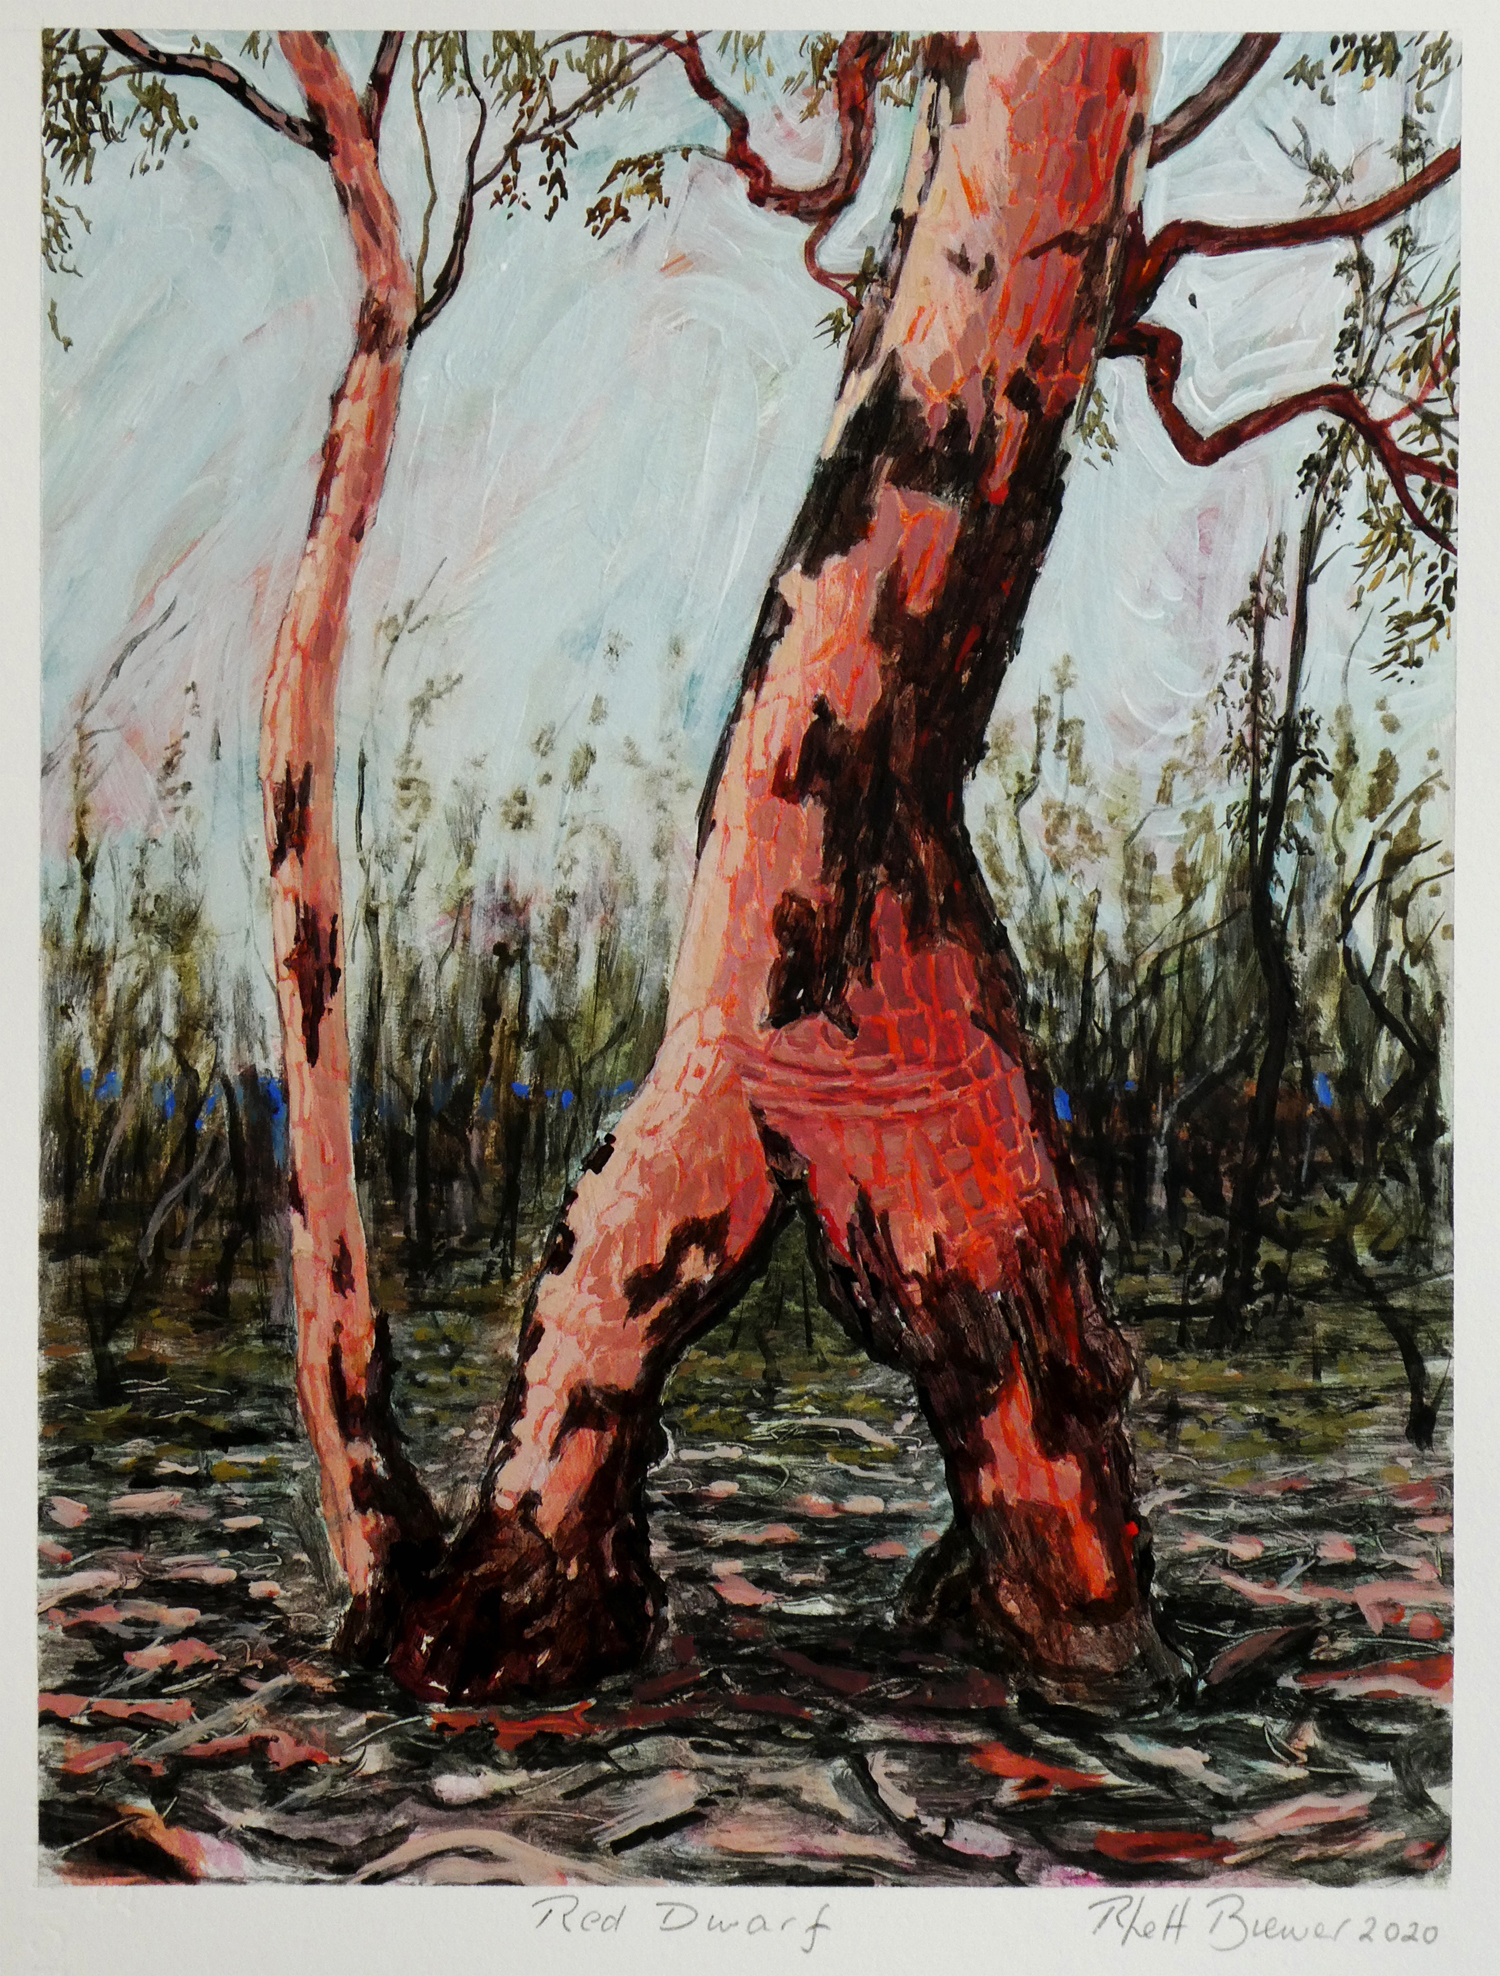 Red Dwarf , 39cm x 28cm, acrylic on 649 g.s.m. watercolour paper, 2020